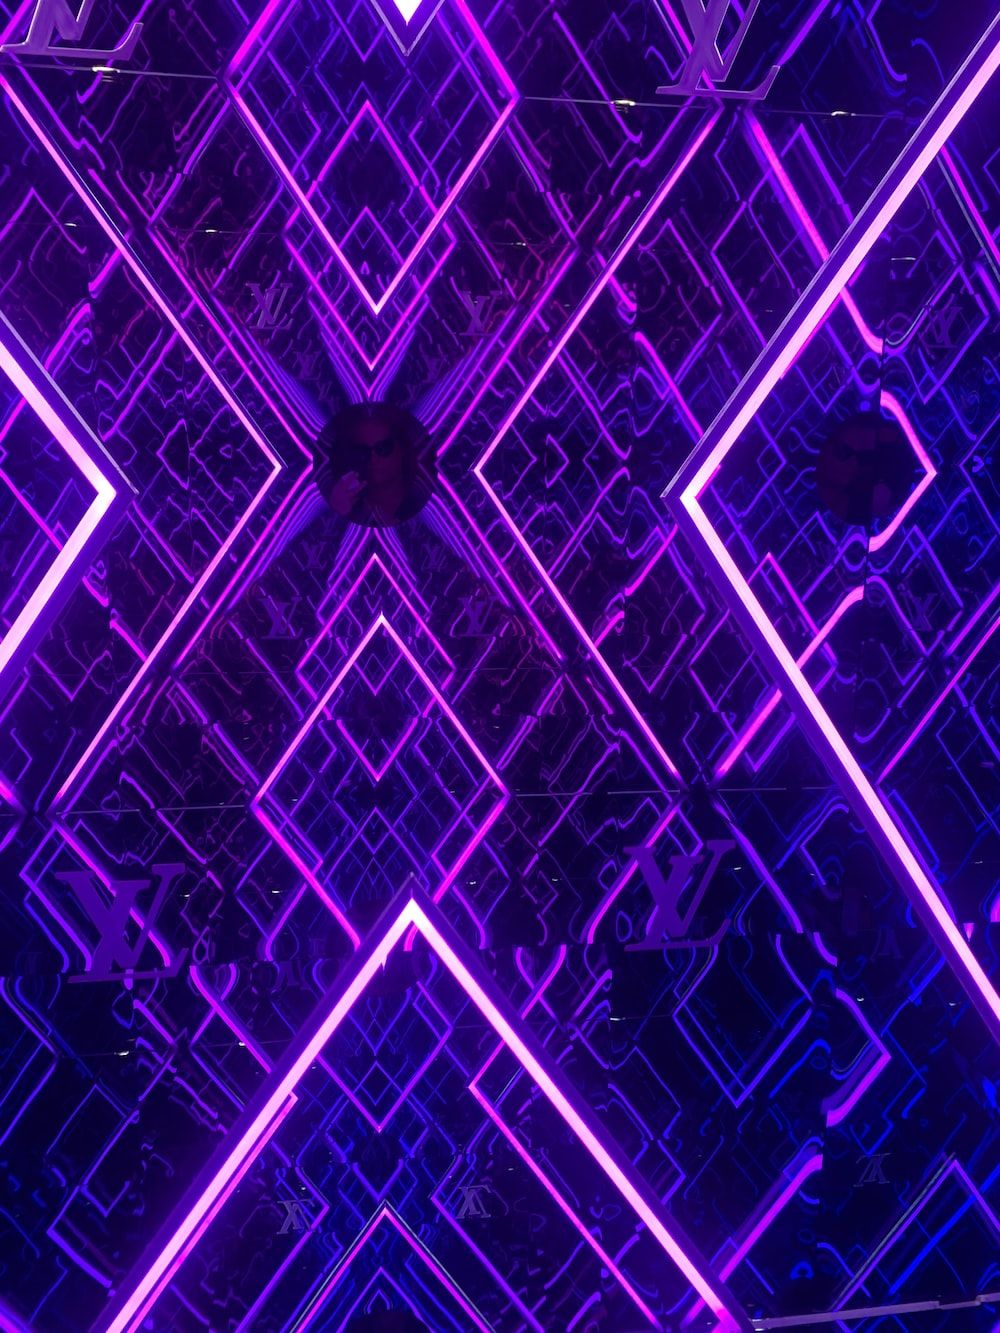 A purple neon light with geometric shapes - Neon purple